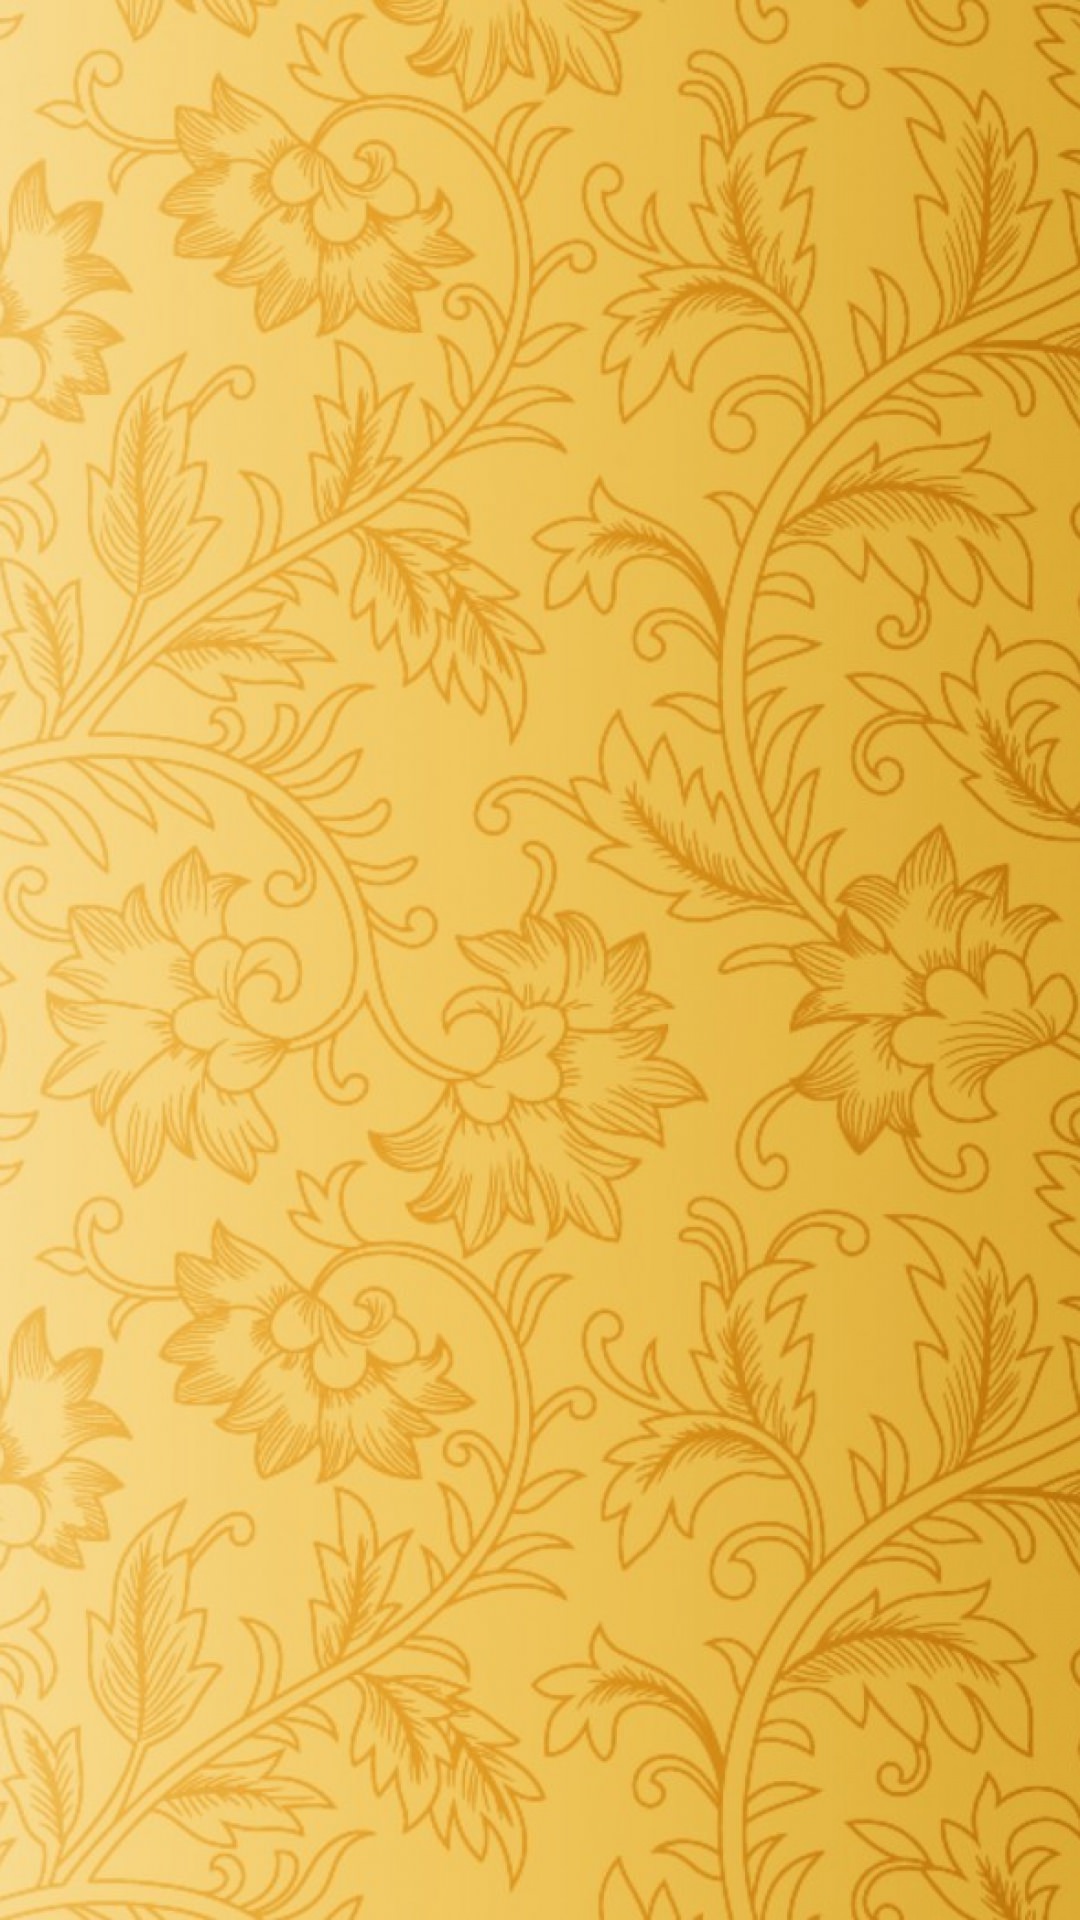 gold background wallpaper,pattern,orange,wallpaper,yellow,floral design